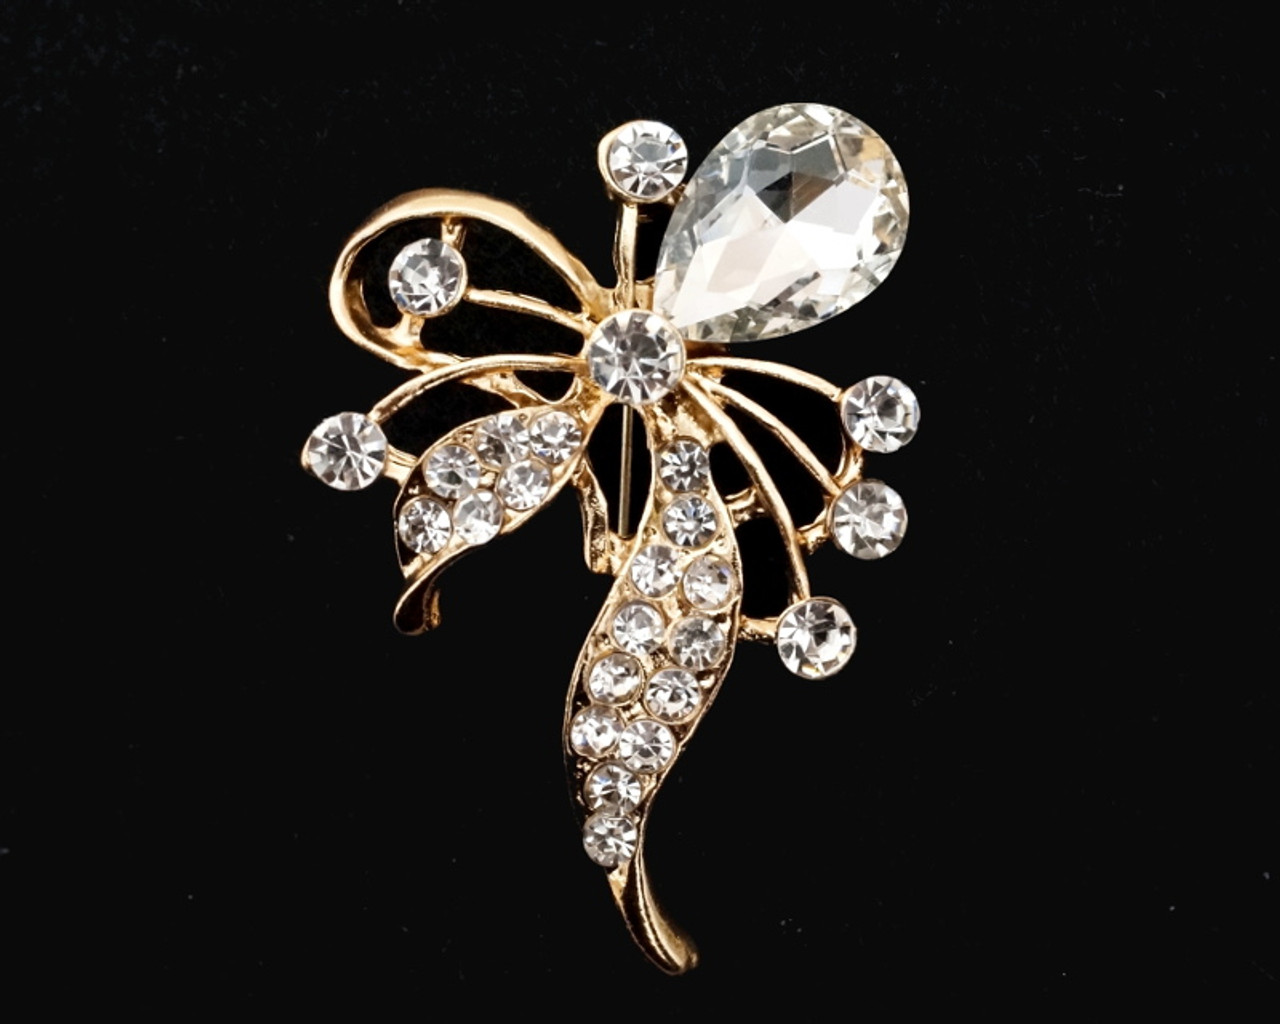 1.5 x 2.1 Gold Jeweled Rhinestone Fashion Brooch Pin - Pack of 12 - CB  Flowers & Crafts